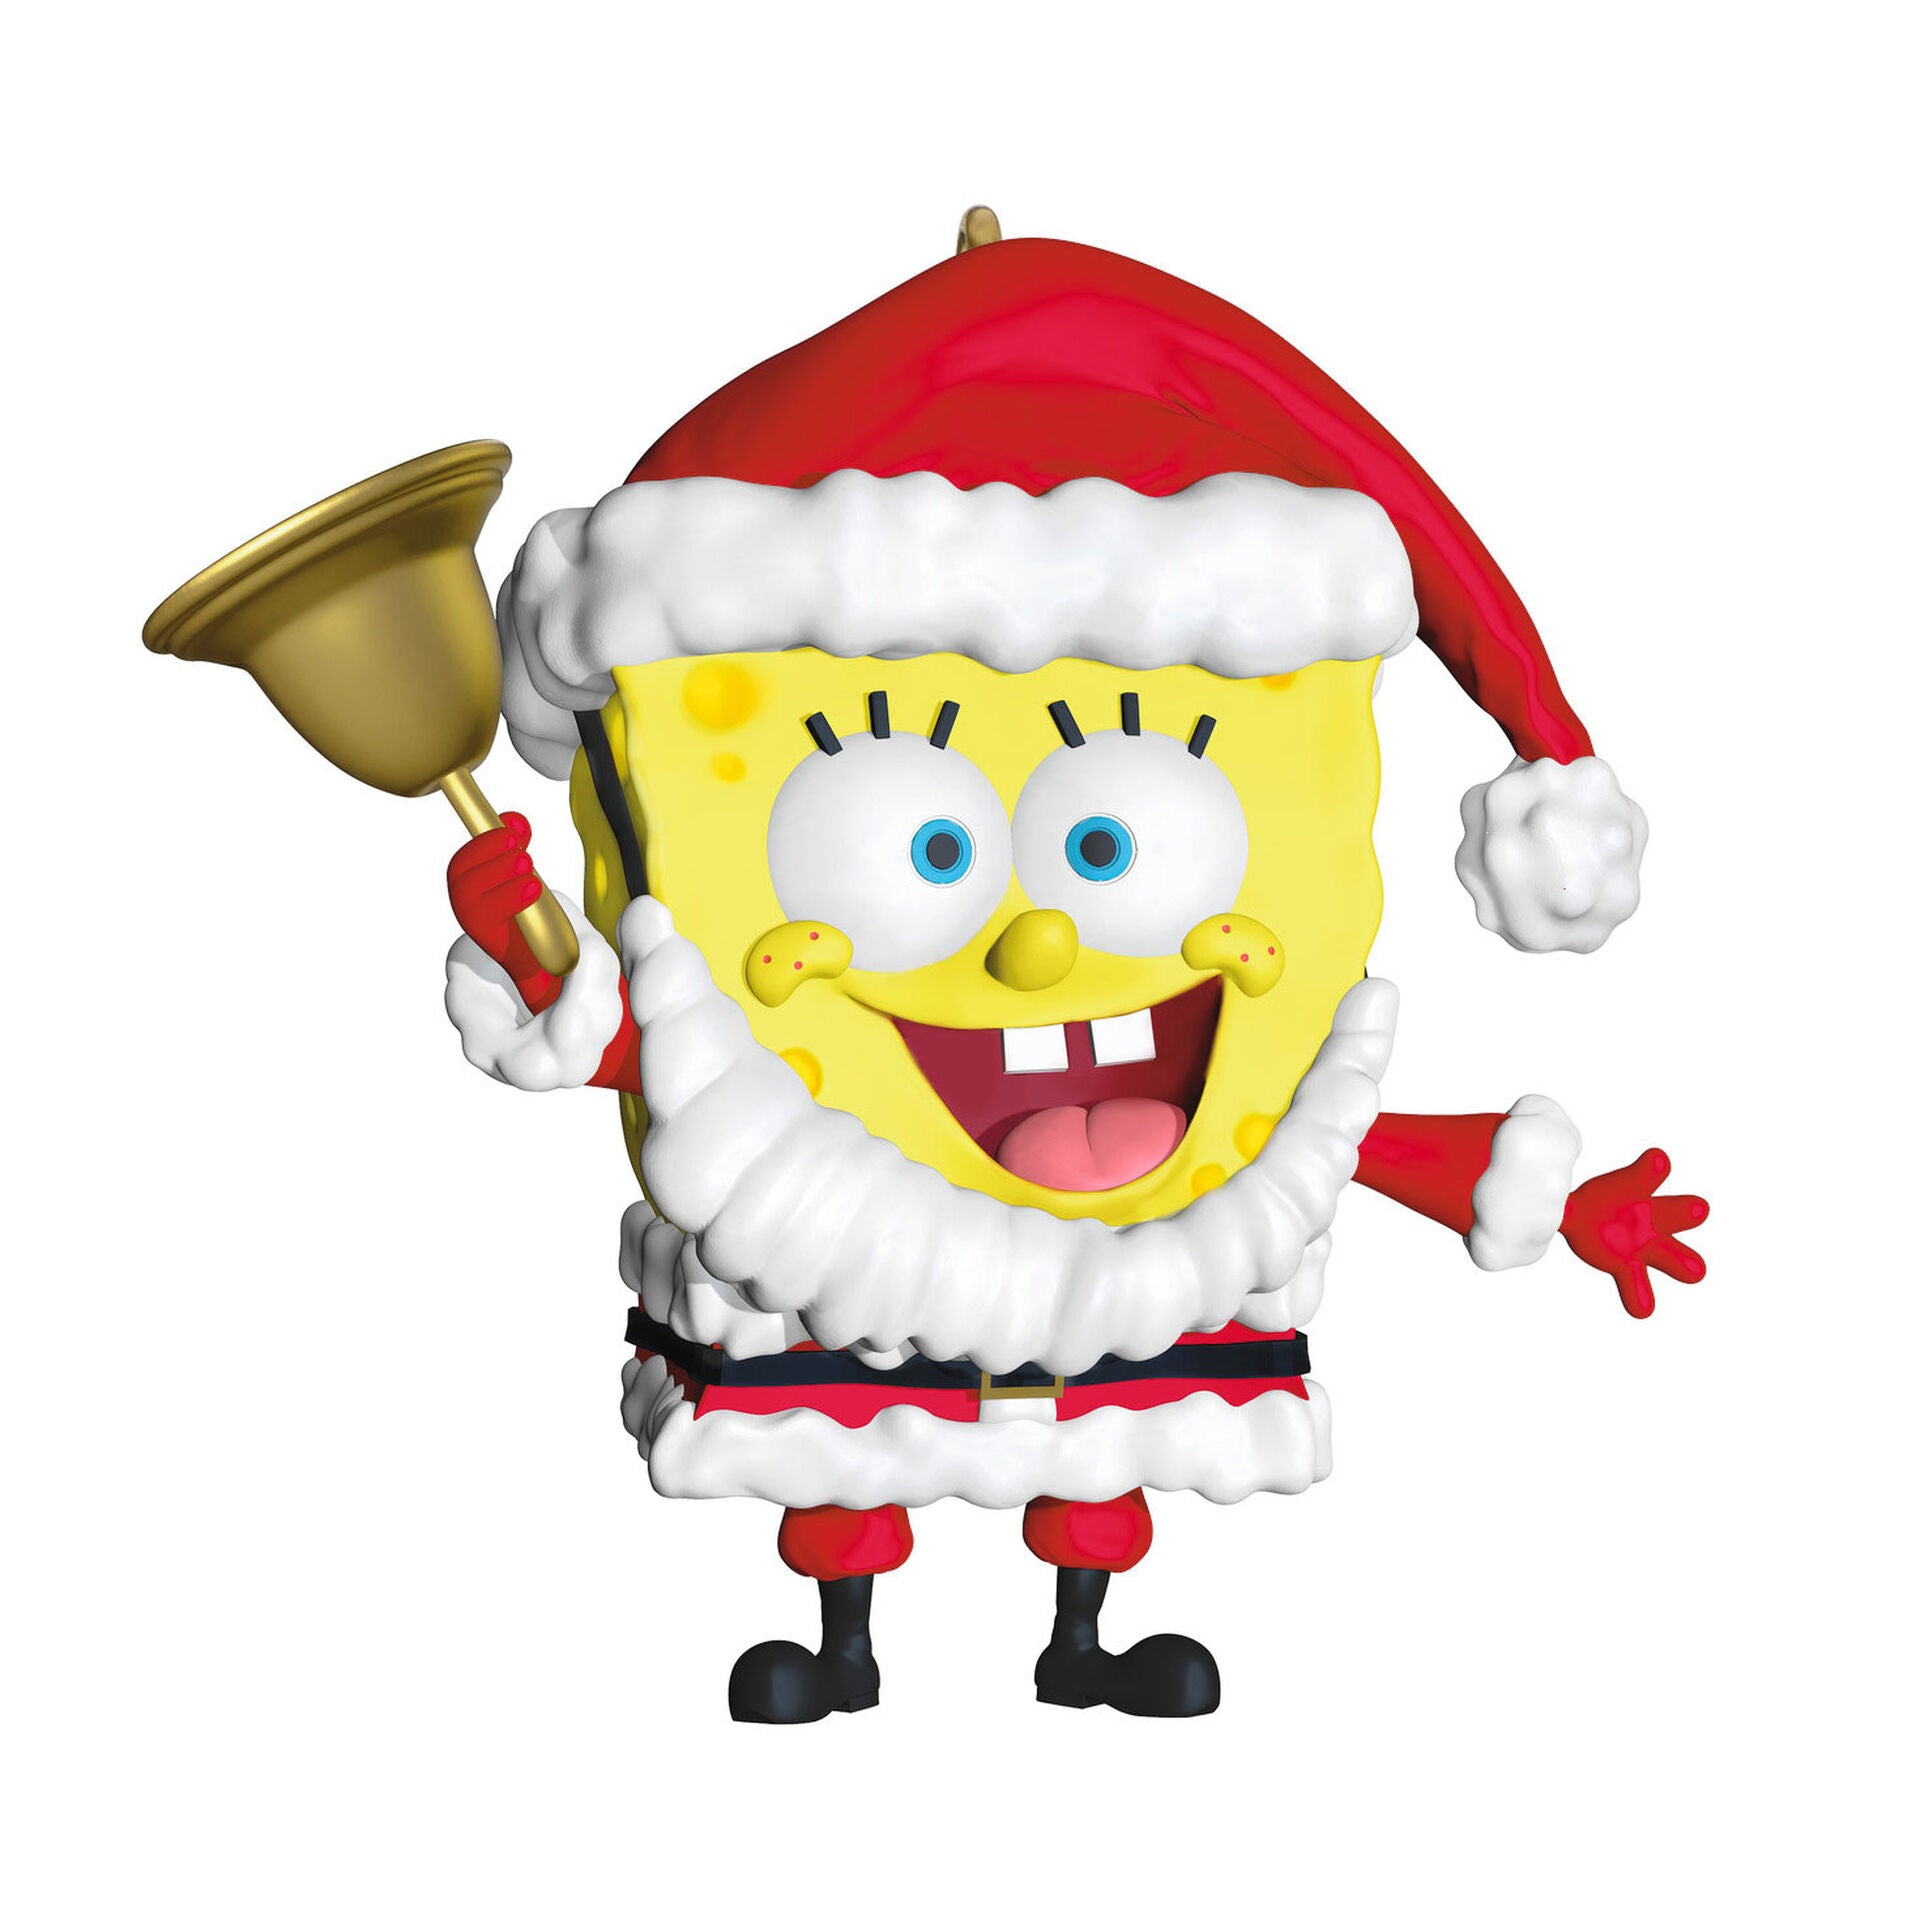 Christmas ornament depicting SpongeBob dressed as Santa holding a bell.